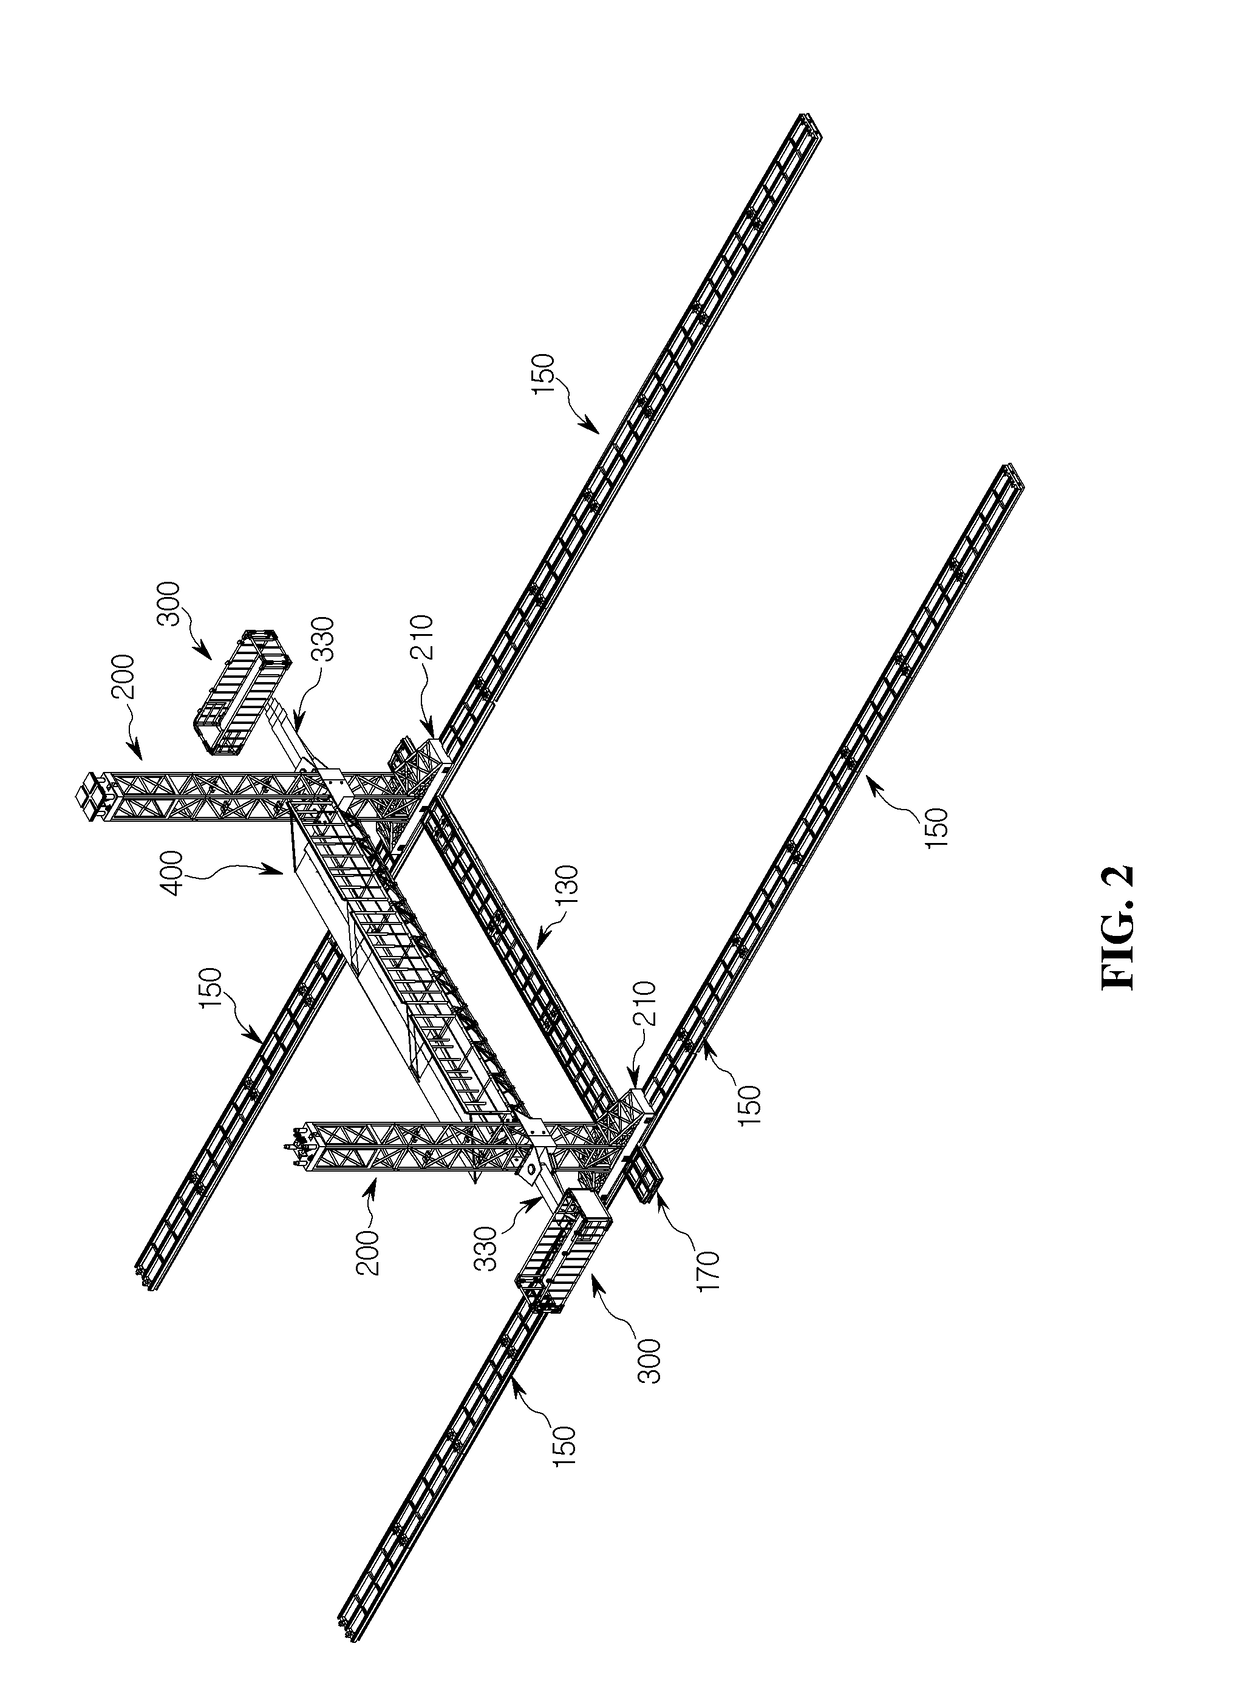 Method for installing gantry tower crane for use in cargo tank checking